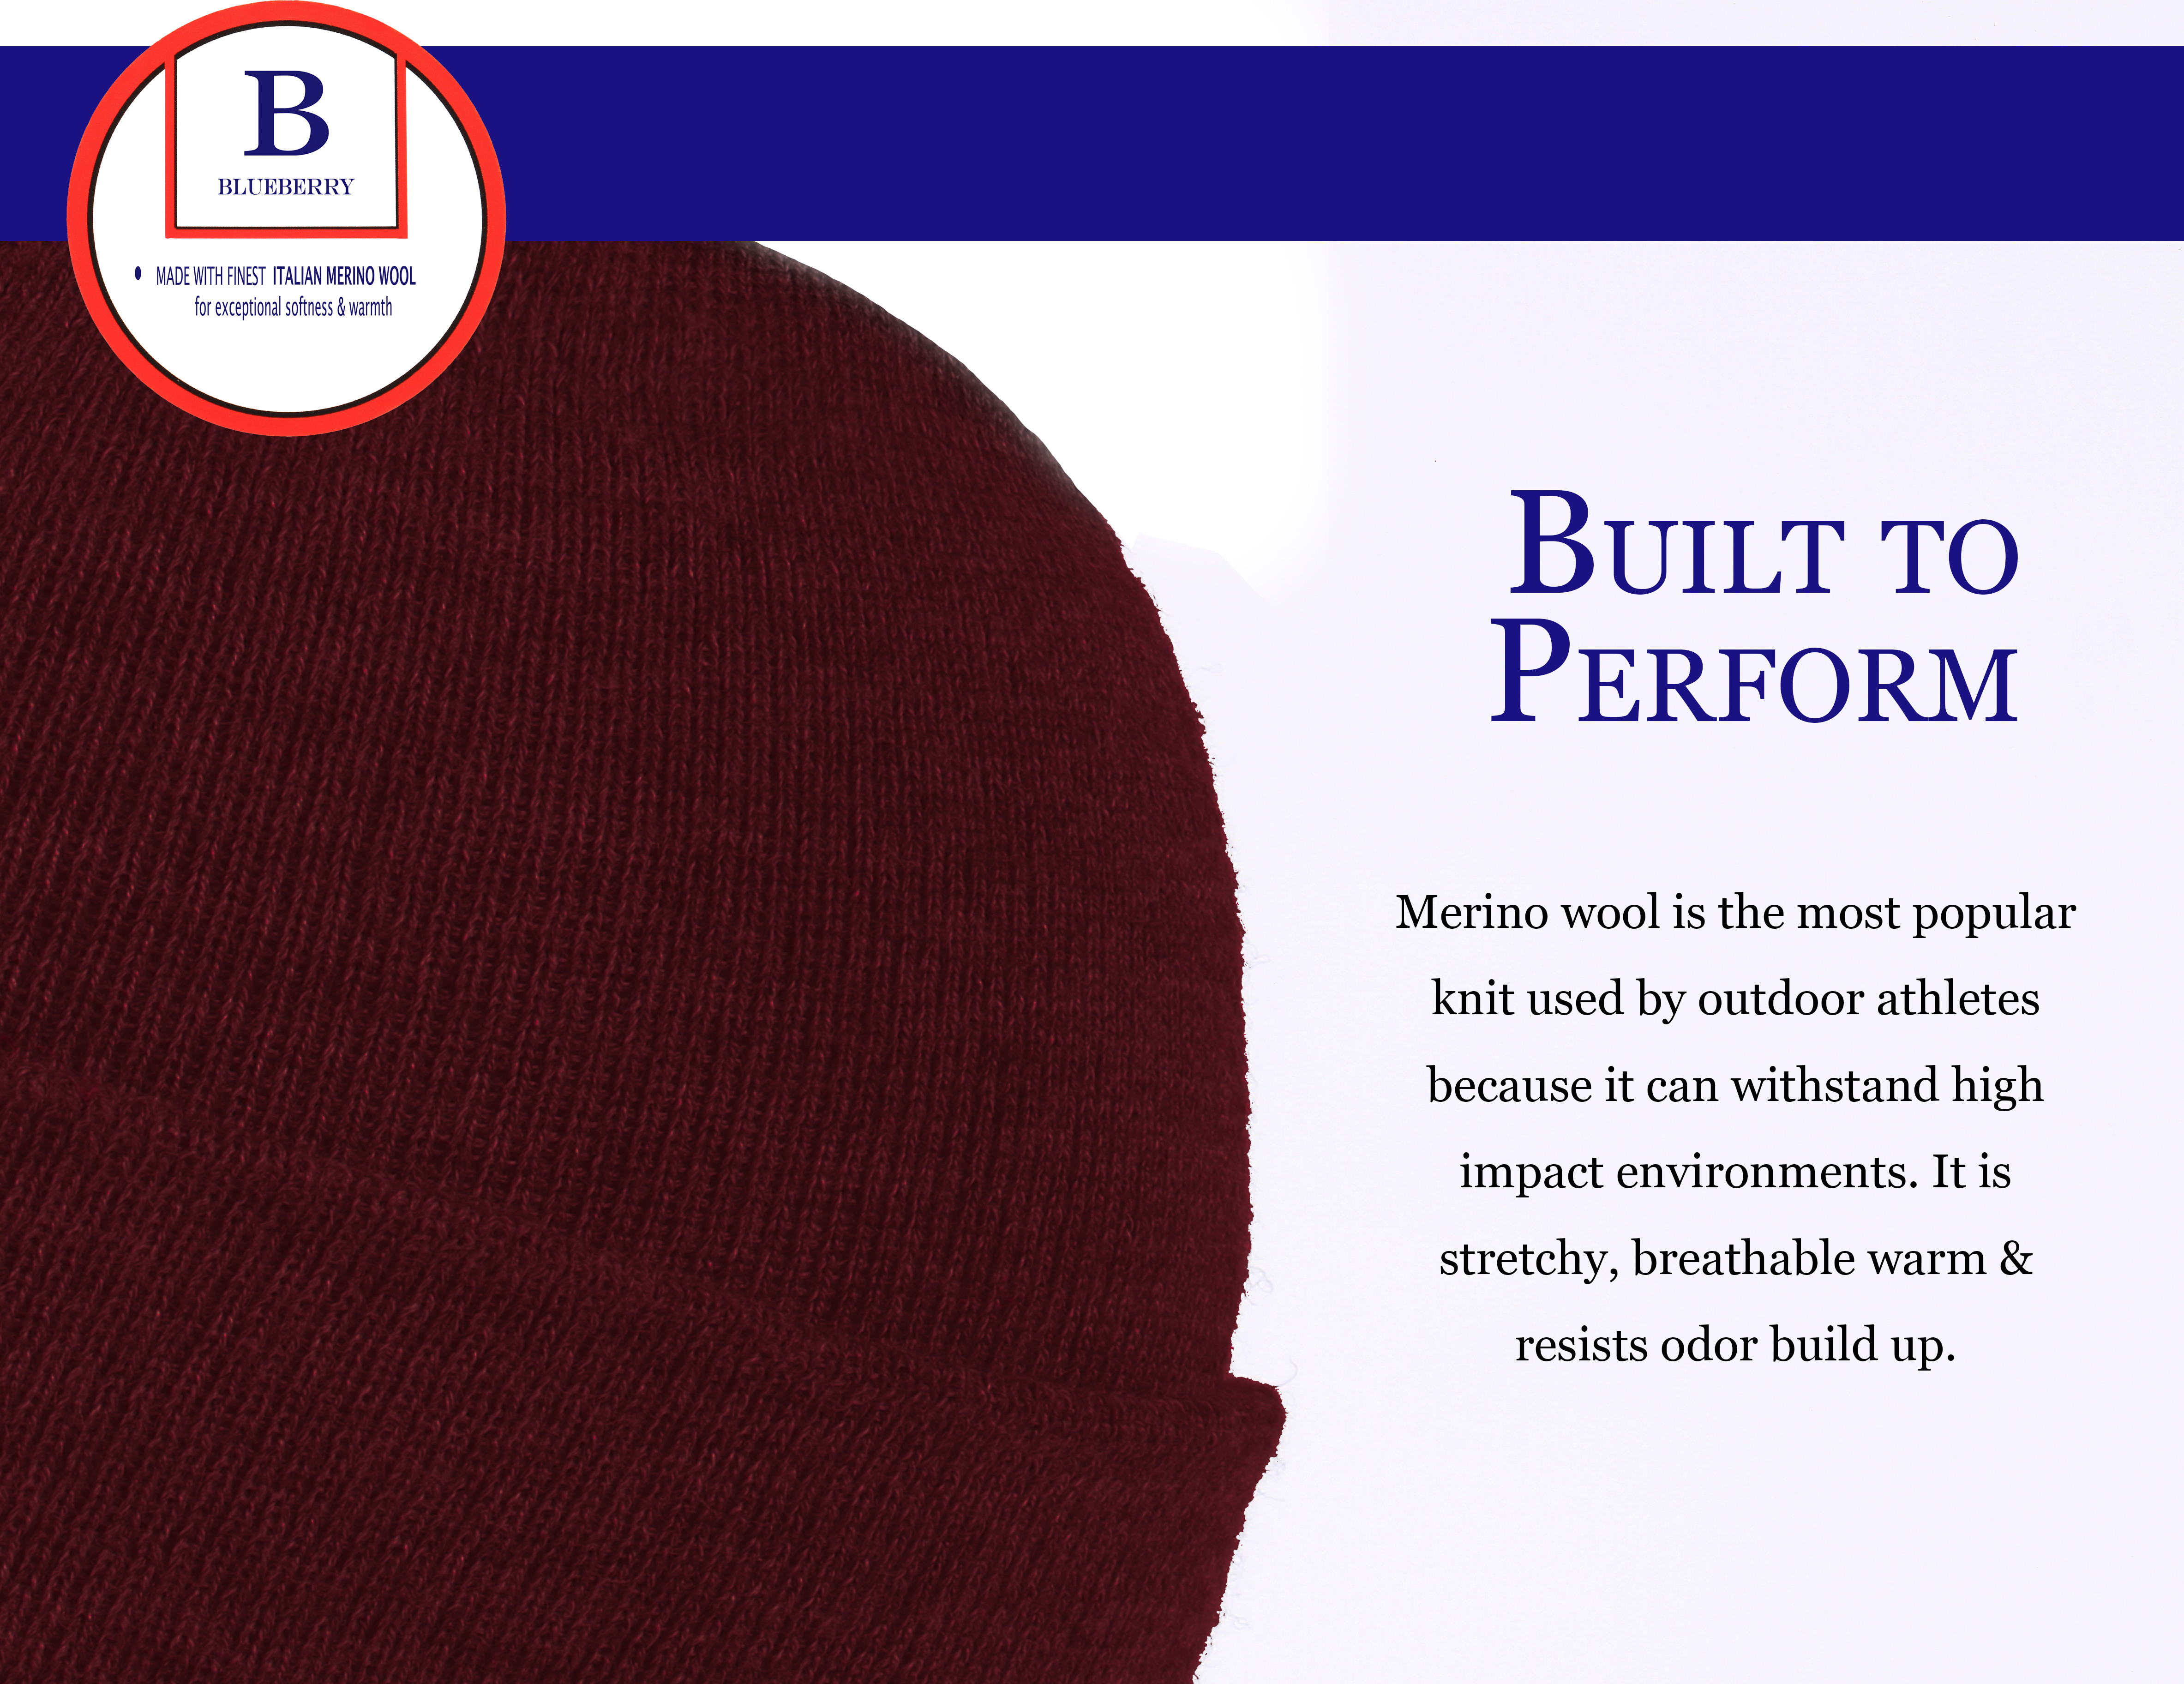 Blueberry Uniforms Burgundy Merino Wool Beanie Hat -Soft Winter and Activewear Watch Cap - image 3 of 6